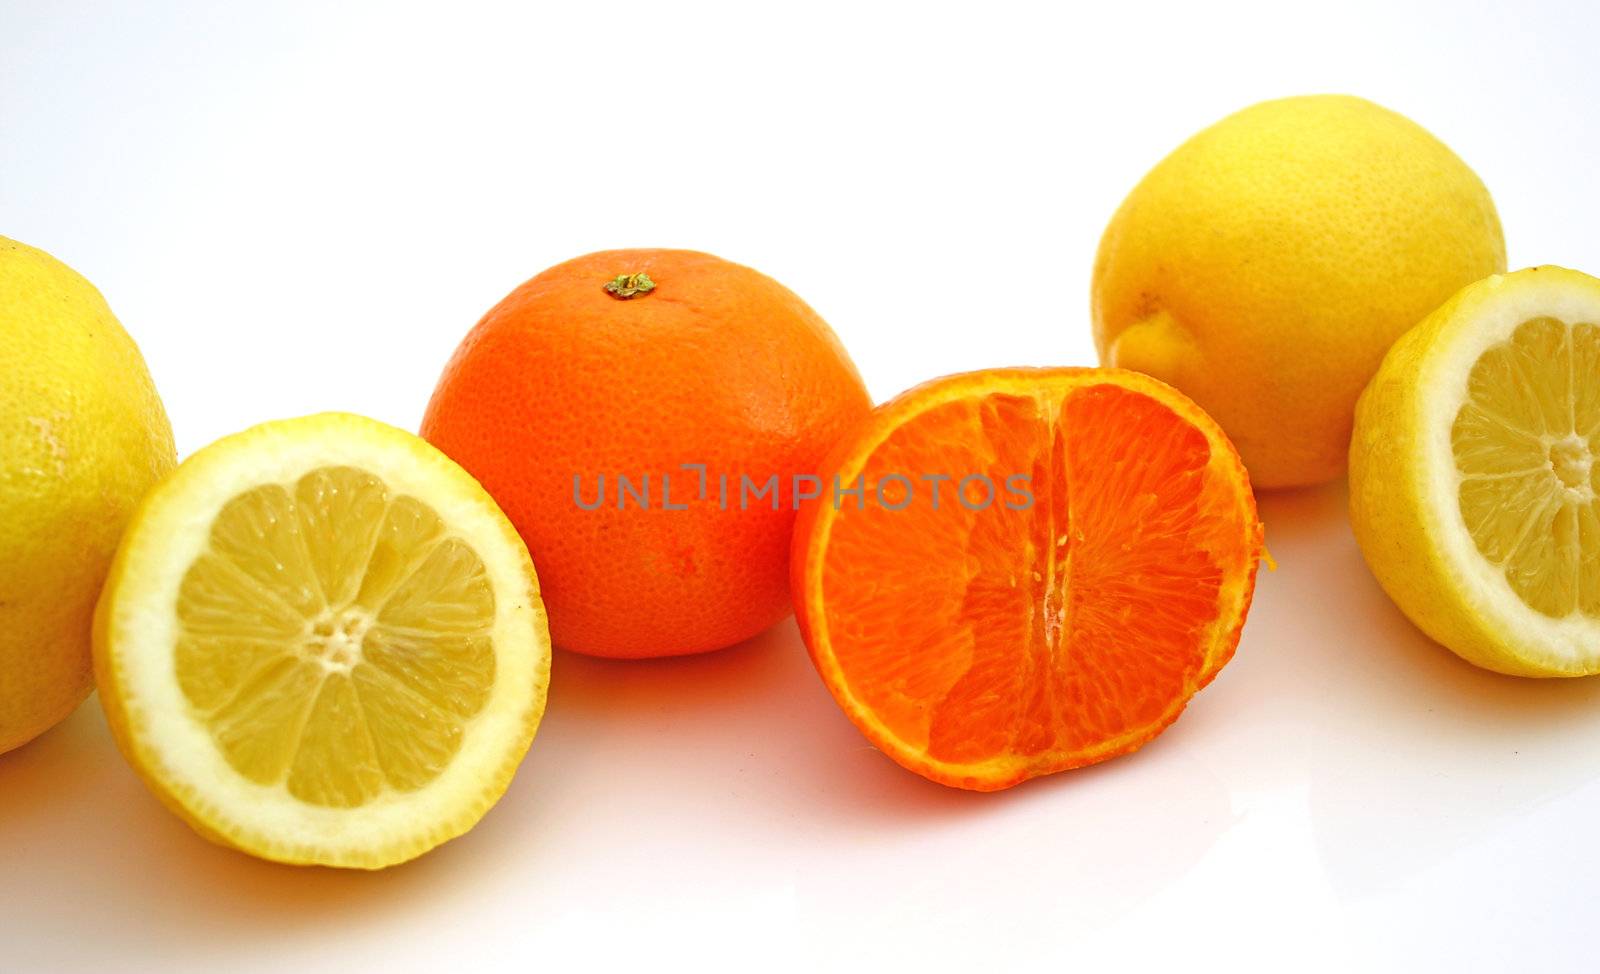 lemons and mandarins by juweber